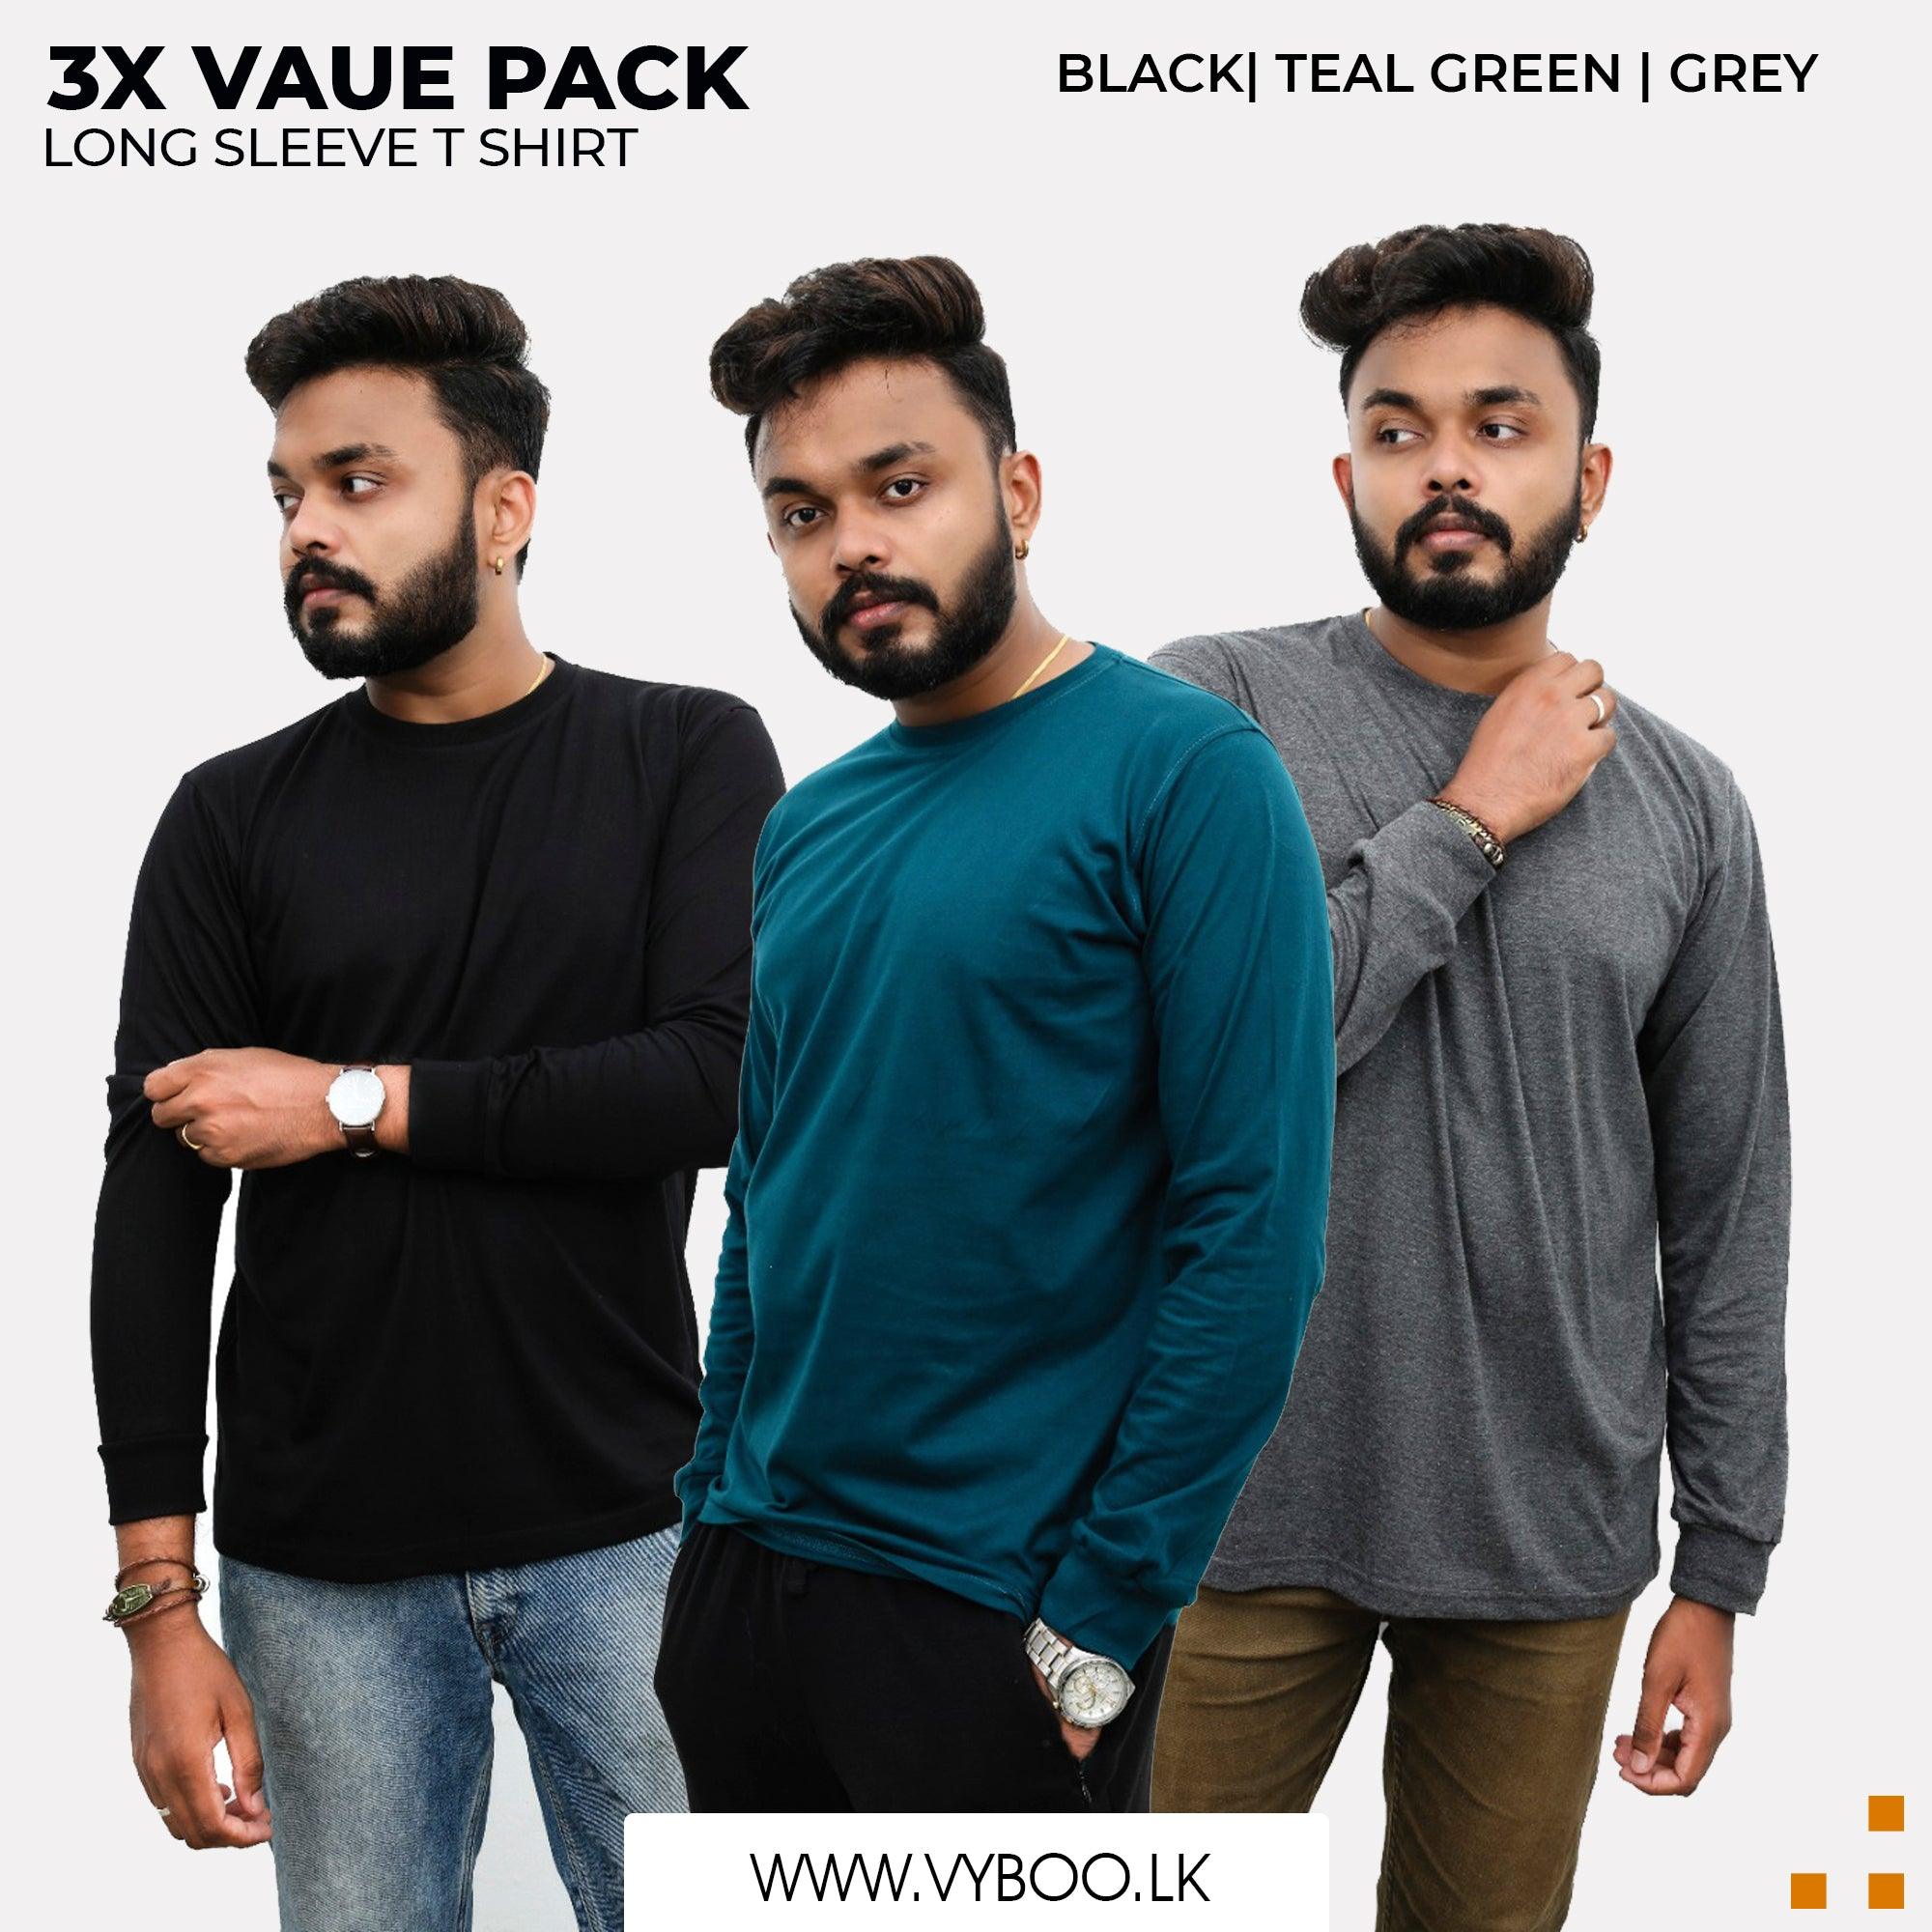 3 Long Sleeve T-Shirts Pack - Black, Teal Green, Grey Vyboo